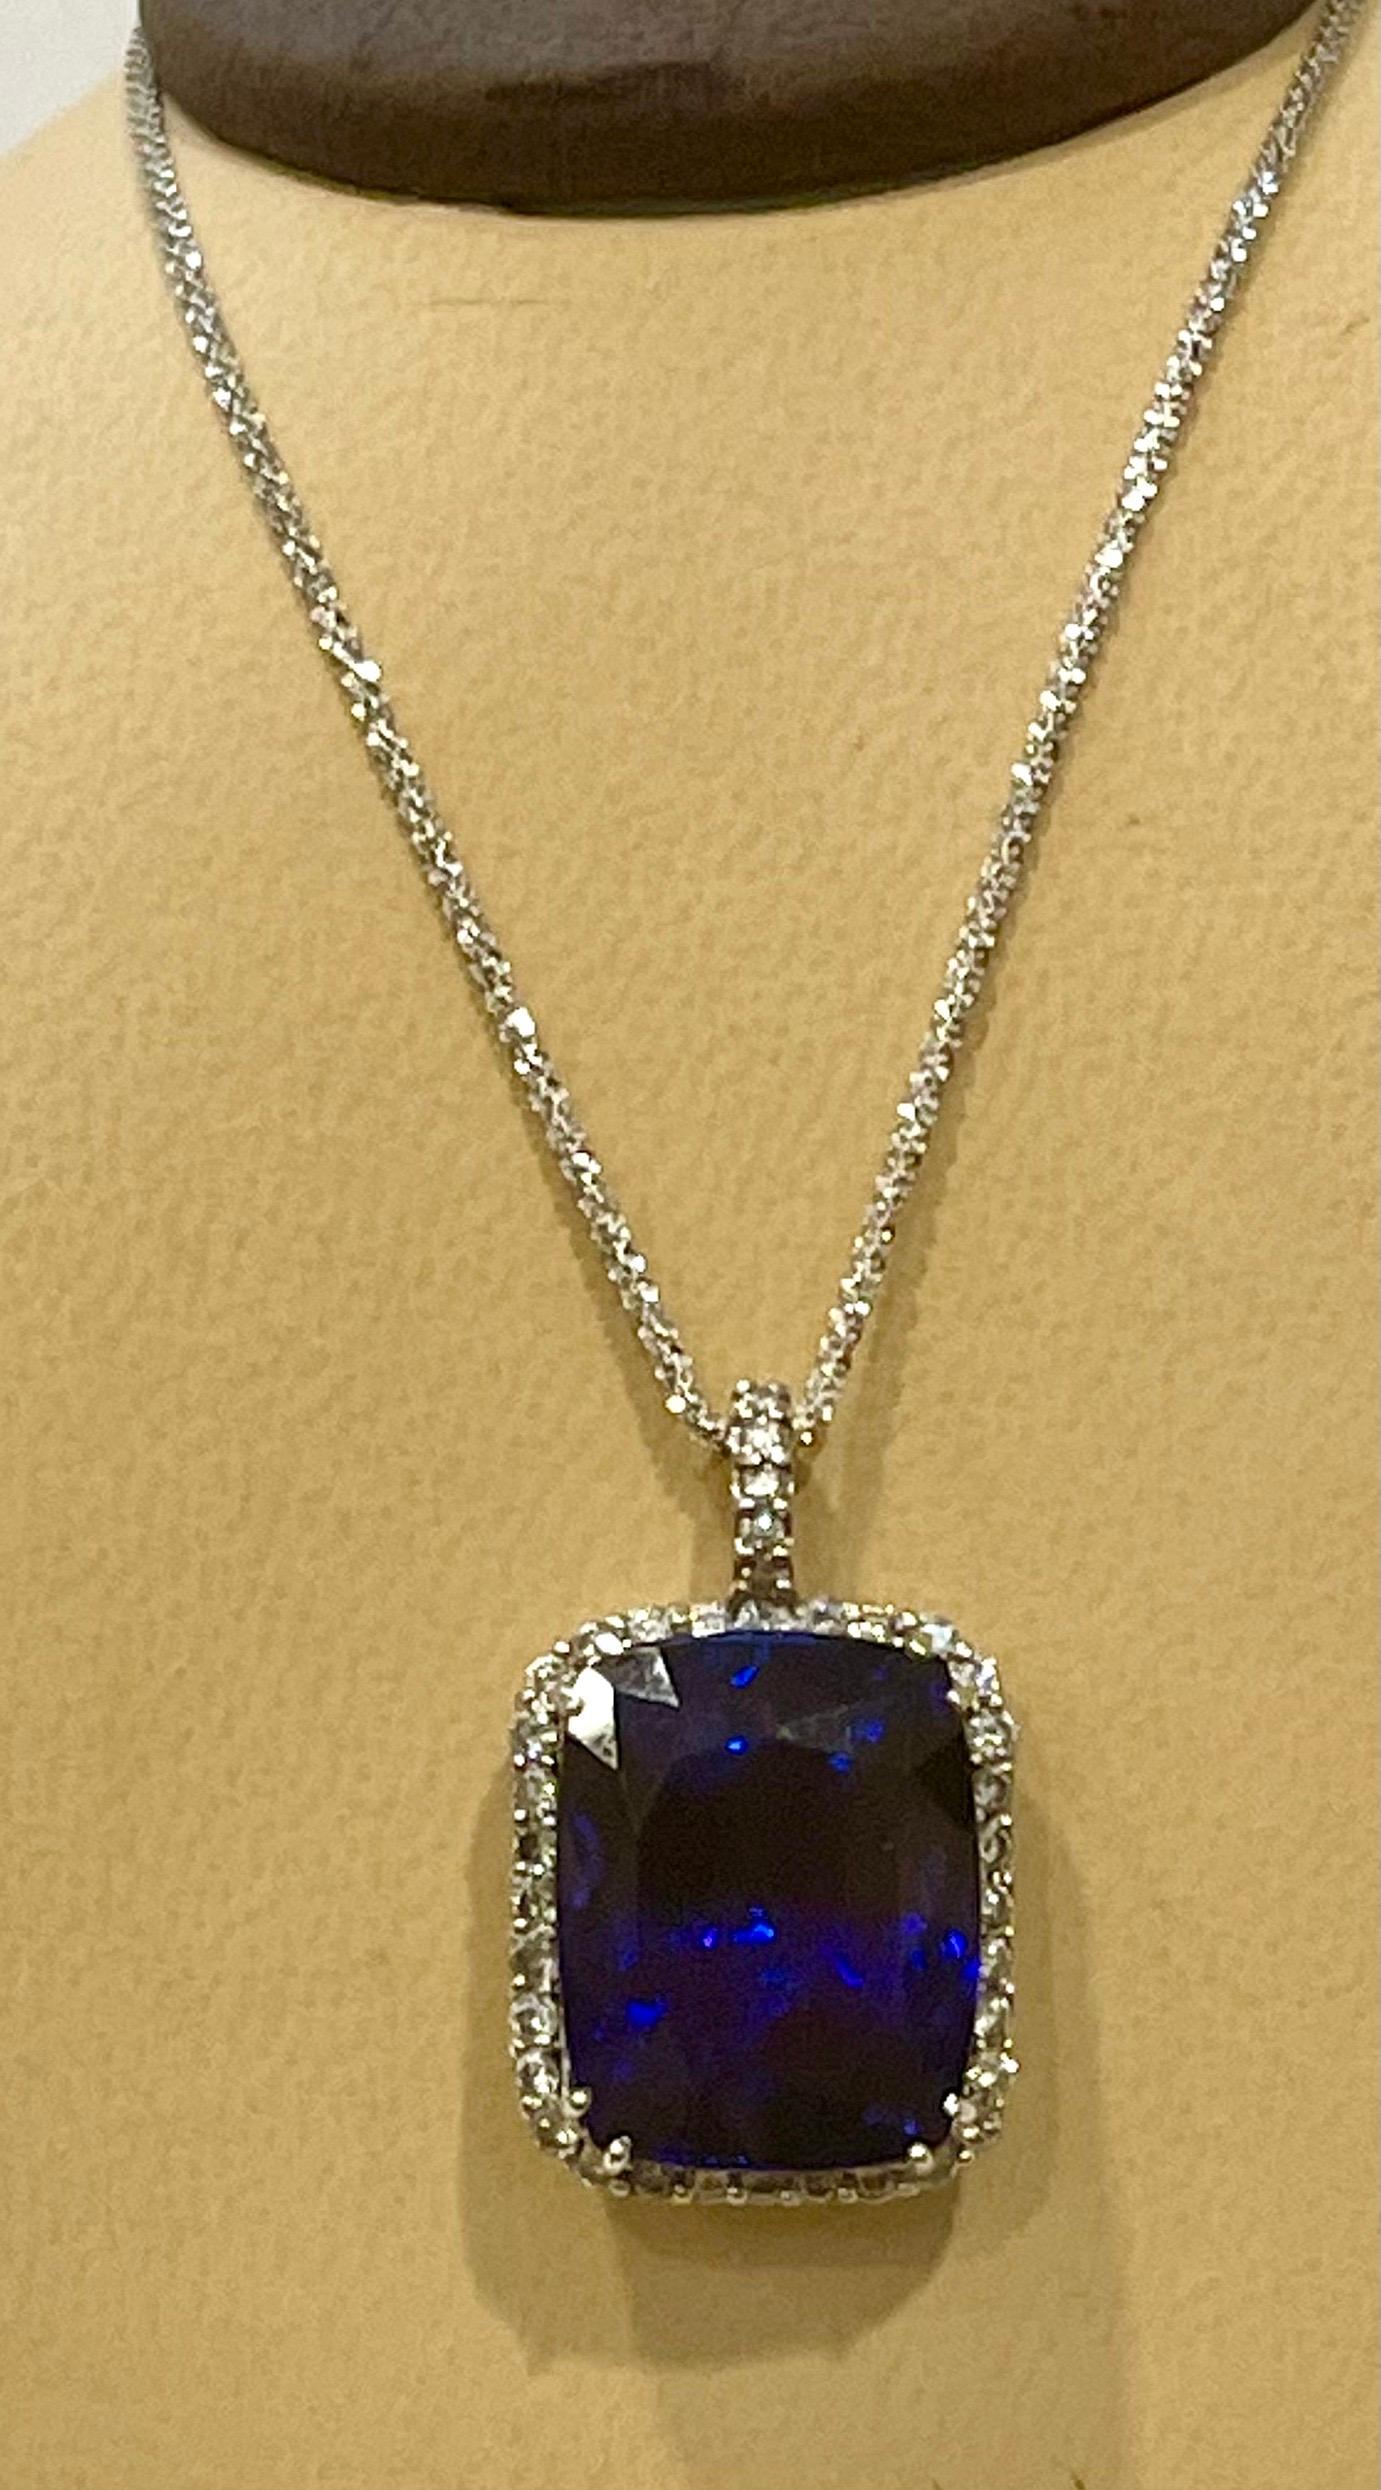 37.5 Carat Tanzanite Necklace & Diamond Pendant with Chain 14 Karat White Gold For Sale 4